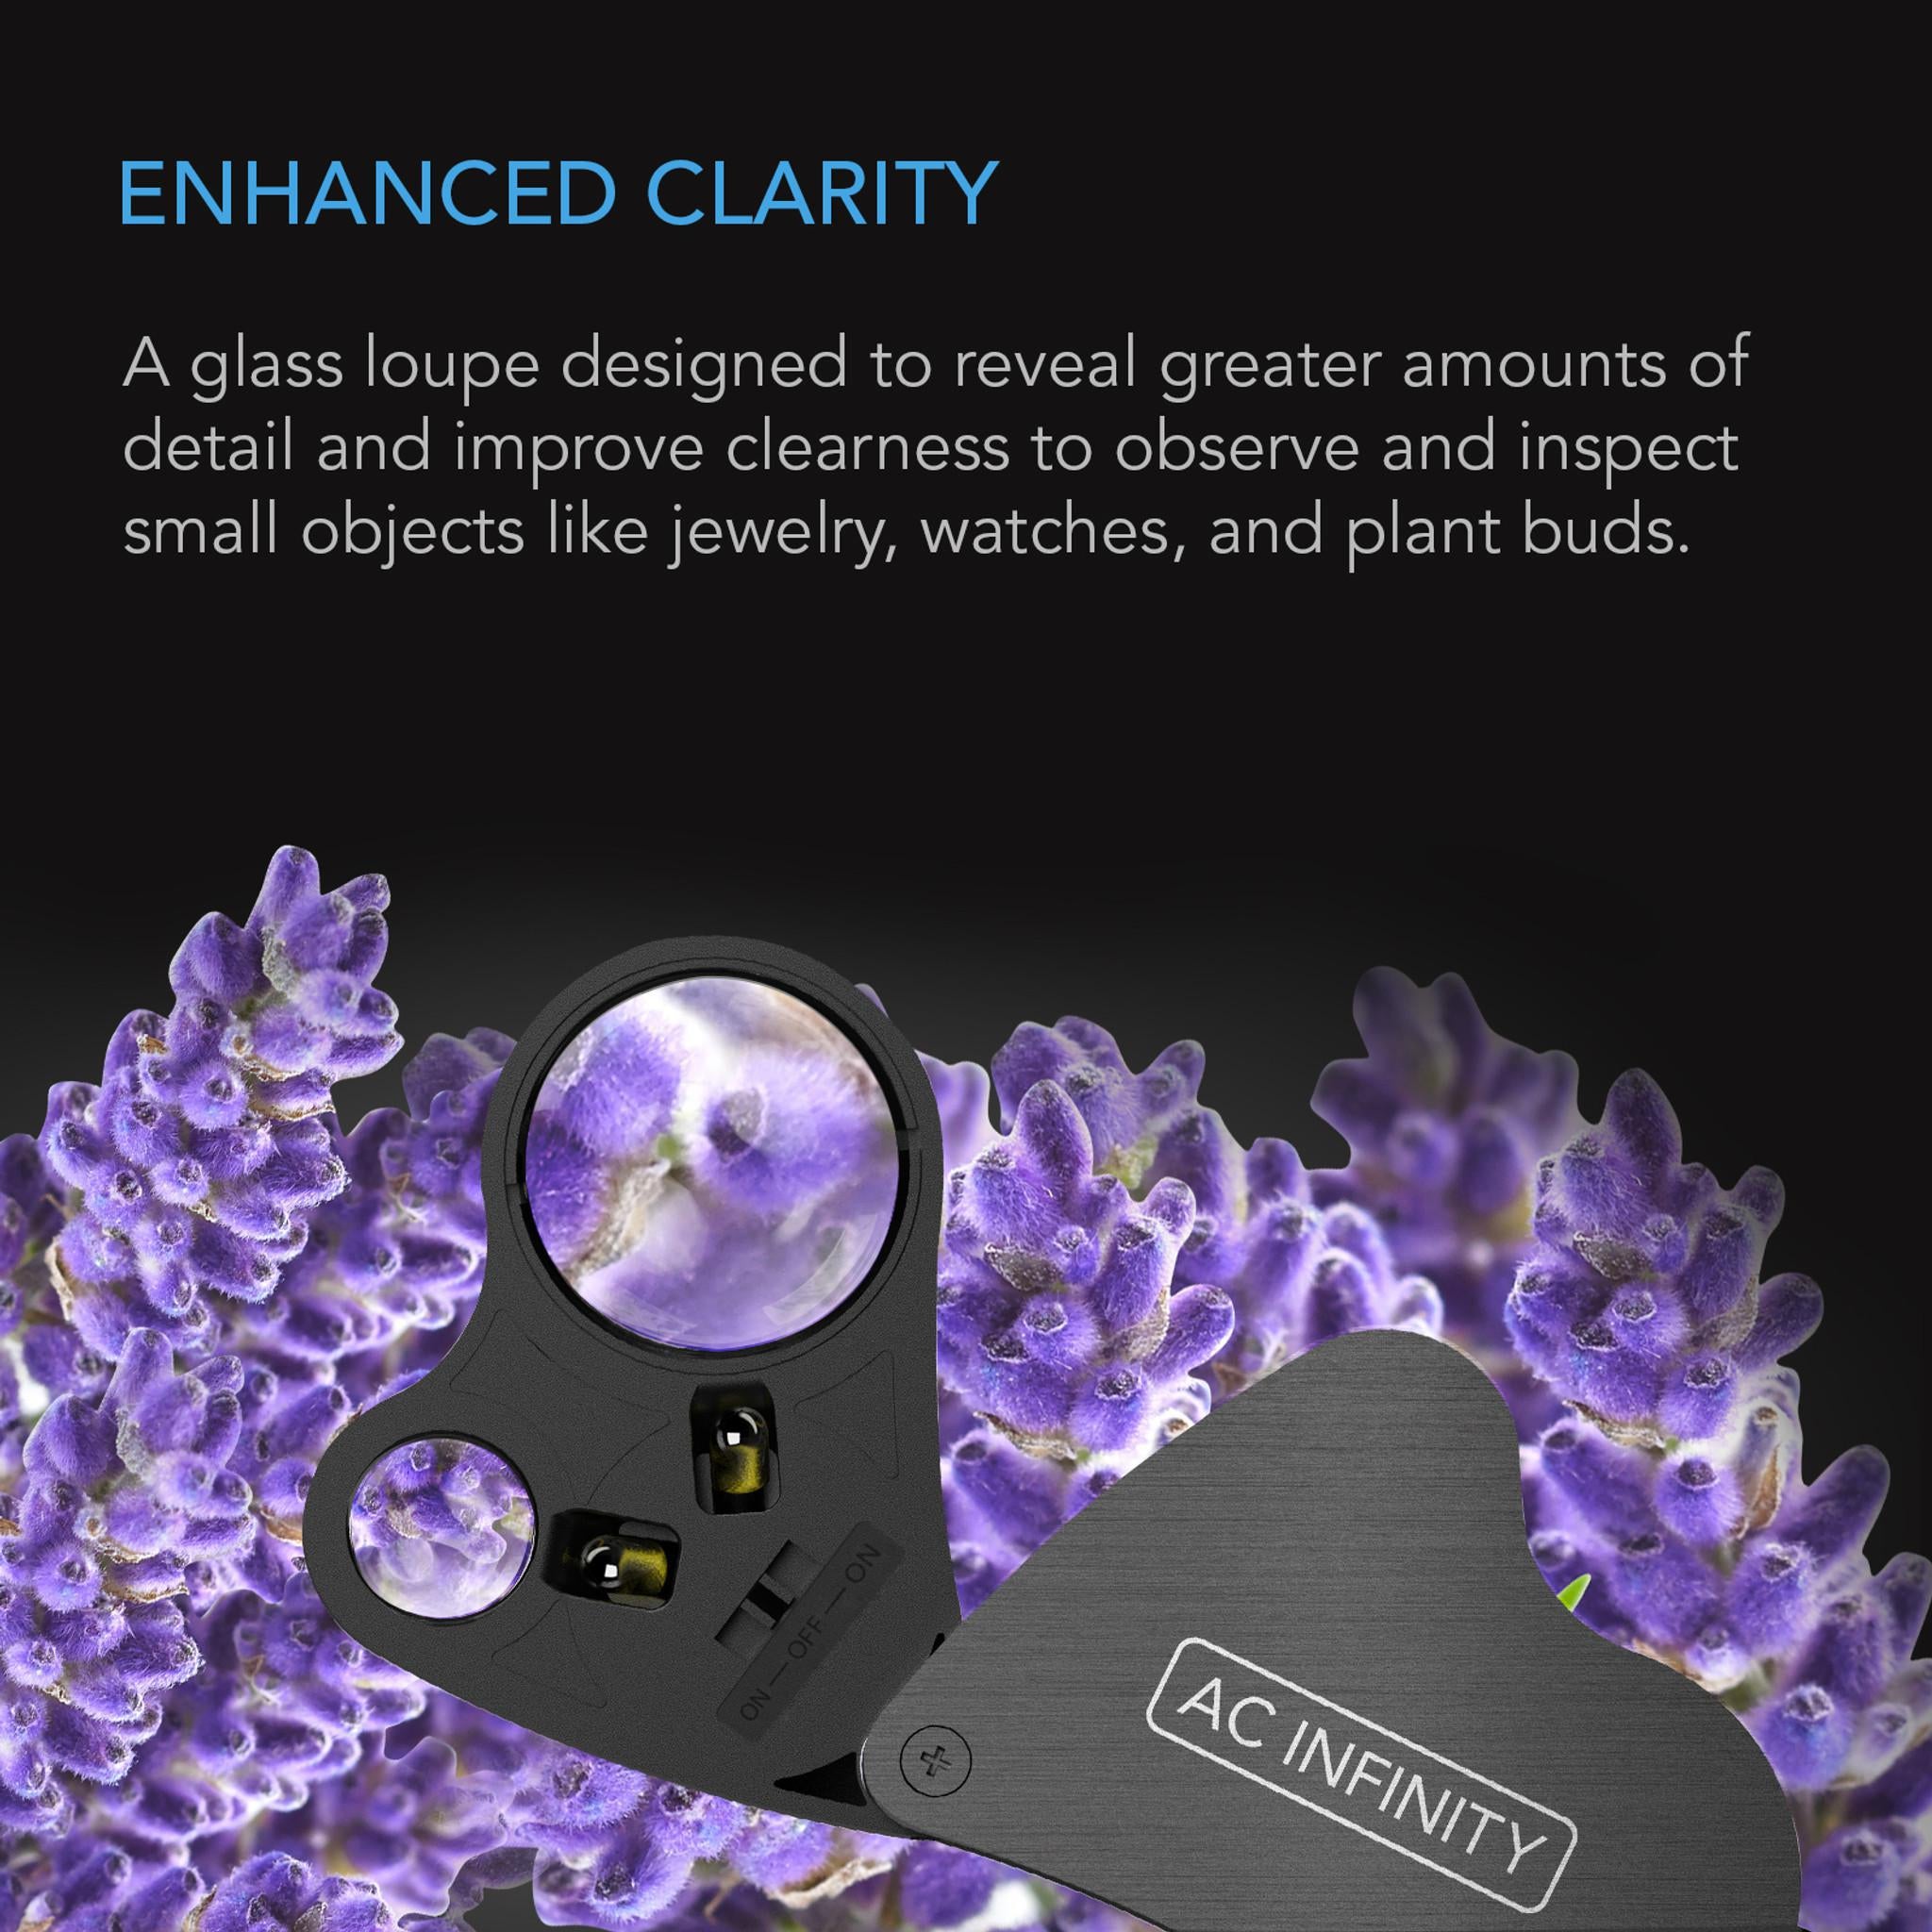 AC infinity Dual lens Jewelers loupe clarity